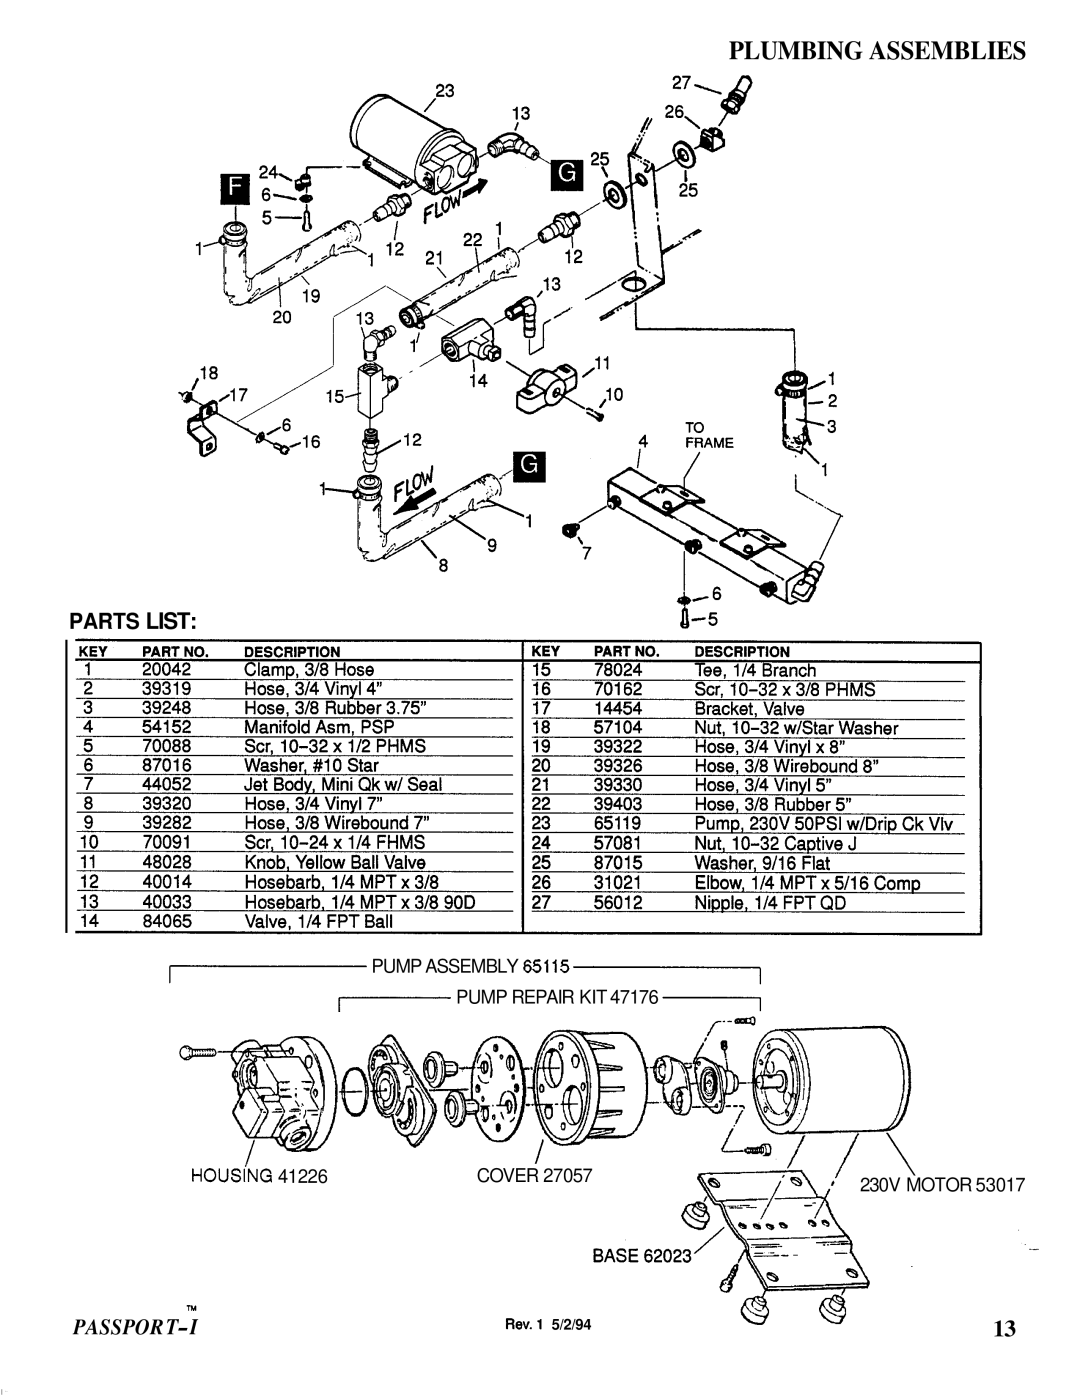 Windsor PSP-IG manual Plumbing Assemblies, Parts List, Passpor T-I, Rew.1 5/2/94 